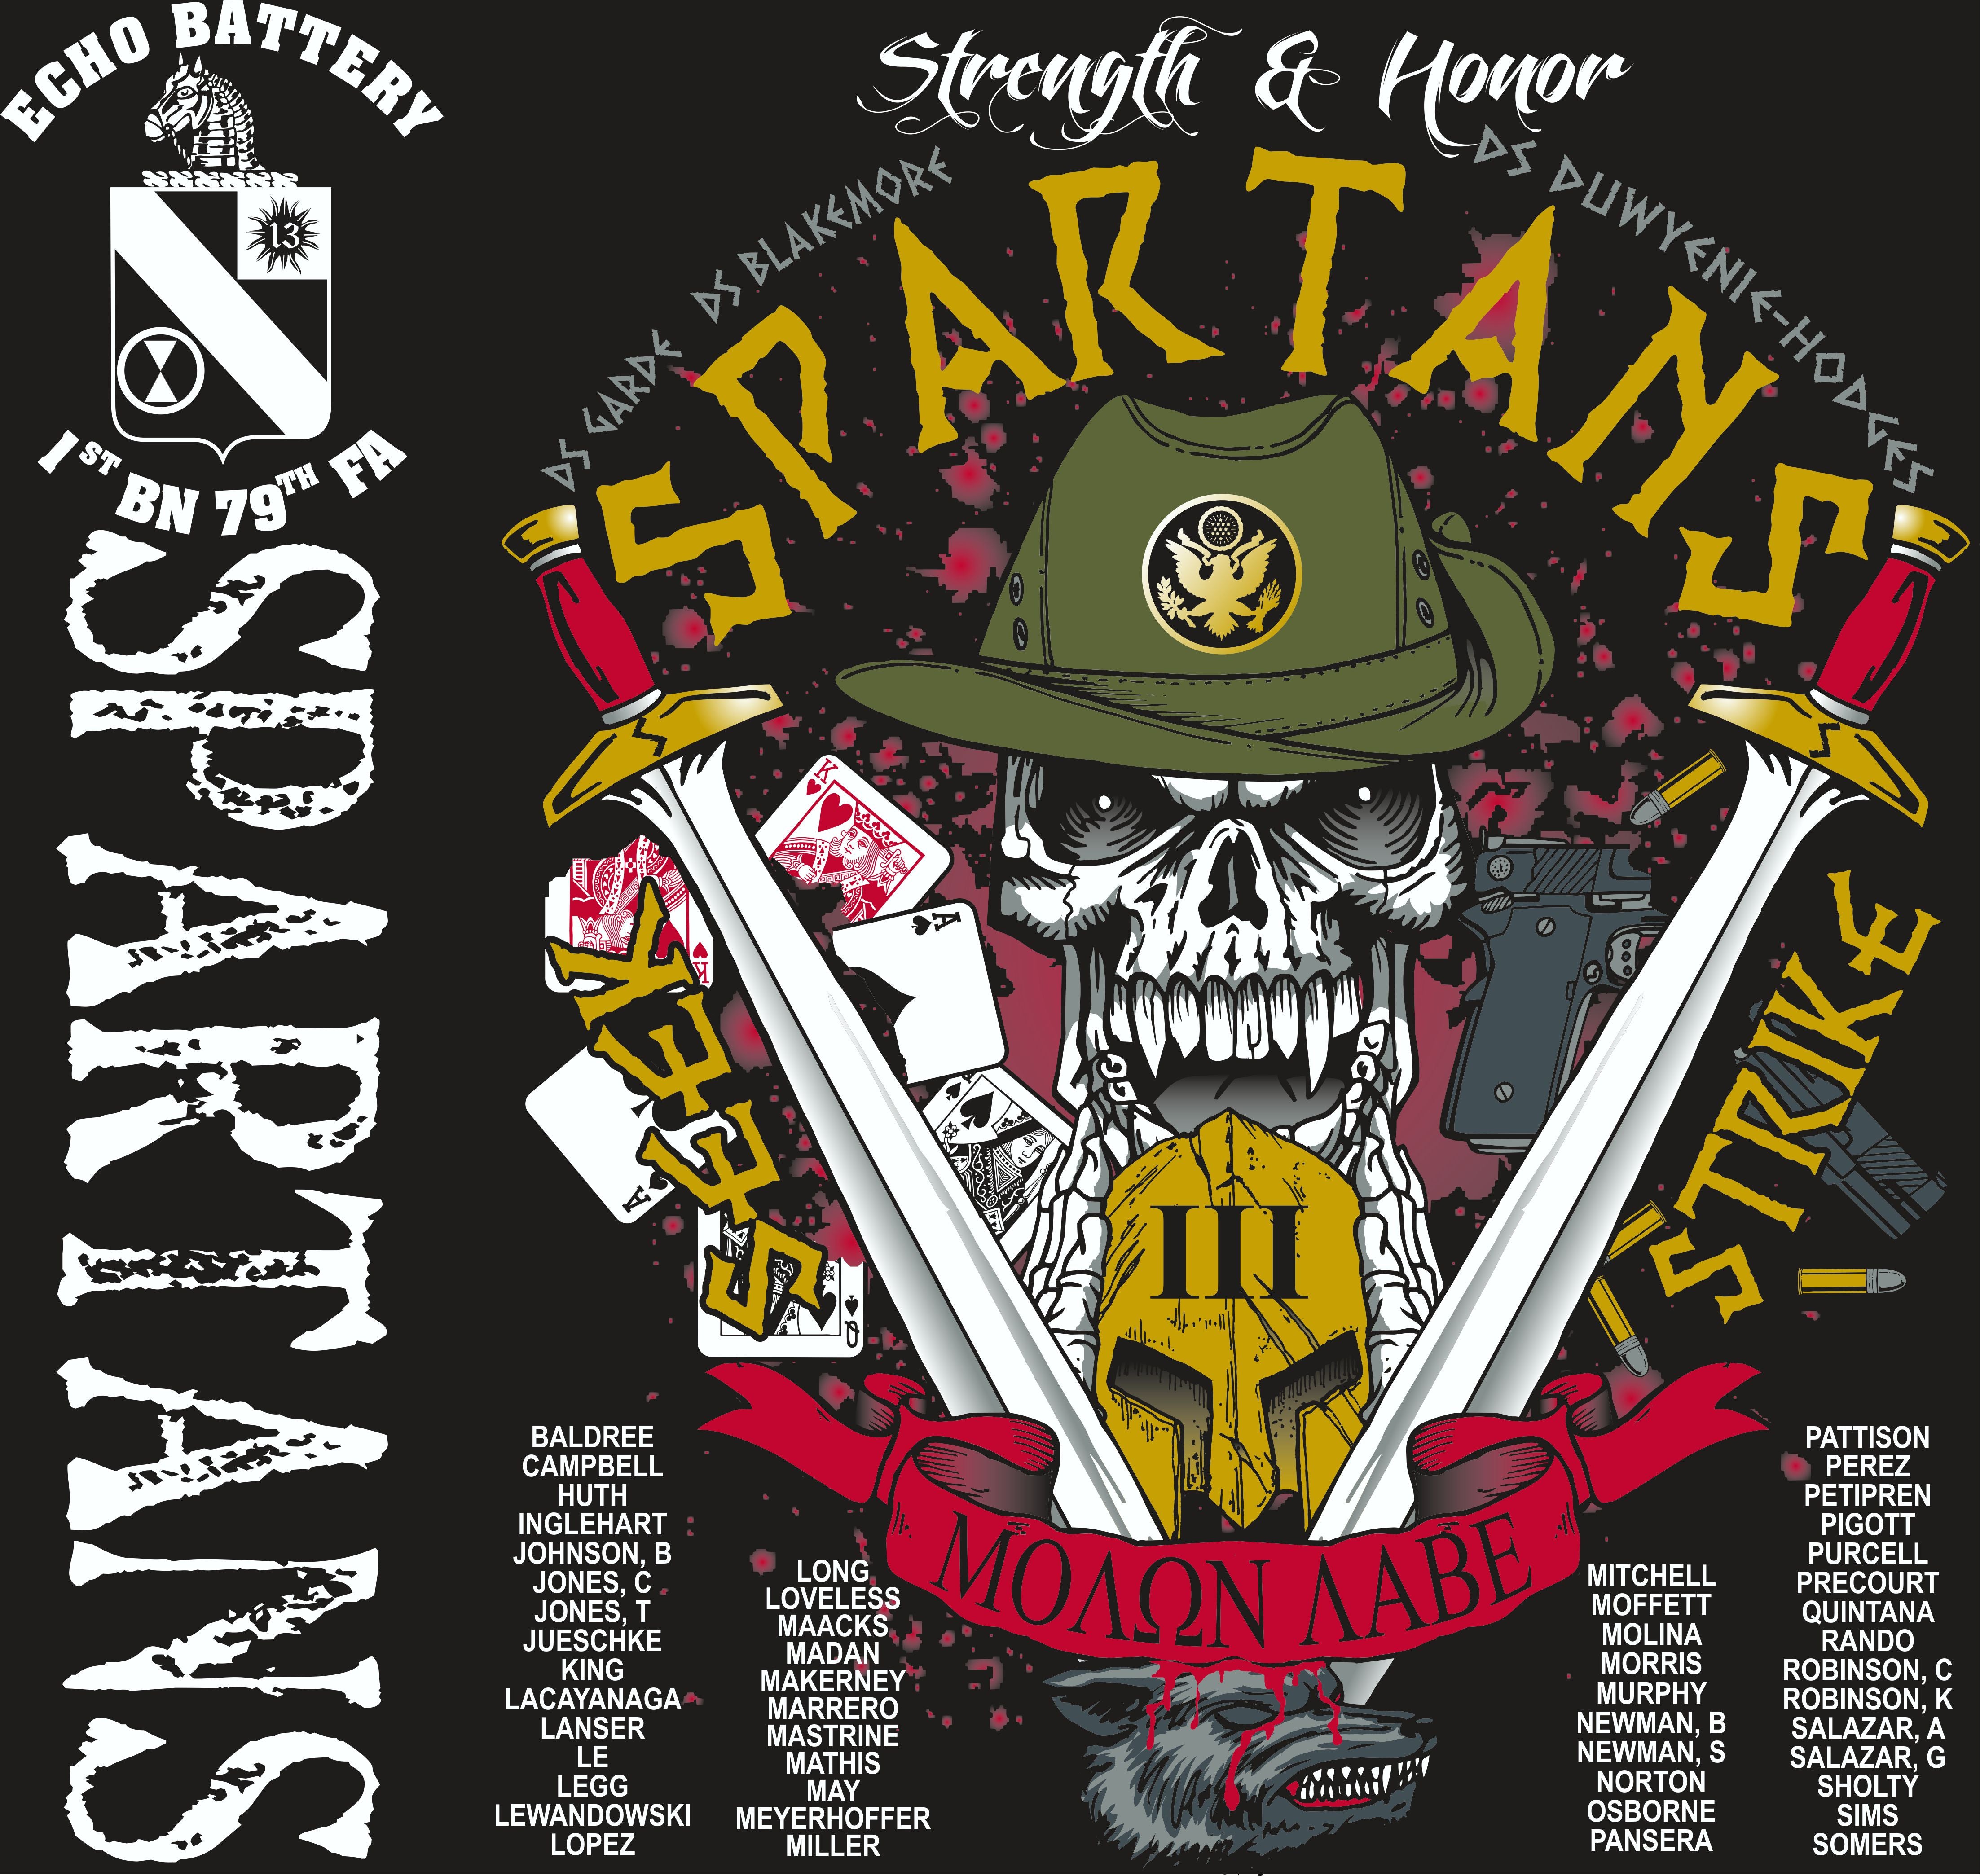 Spartan Warrior Skull Tee shirt design